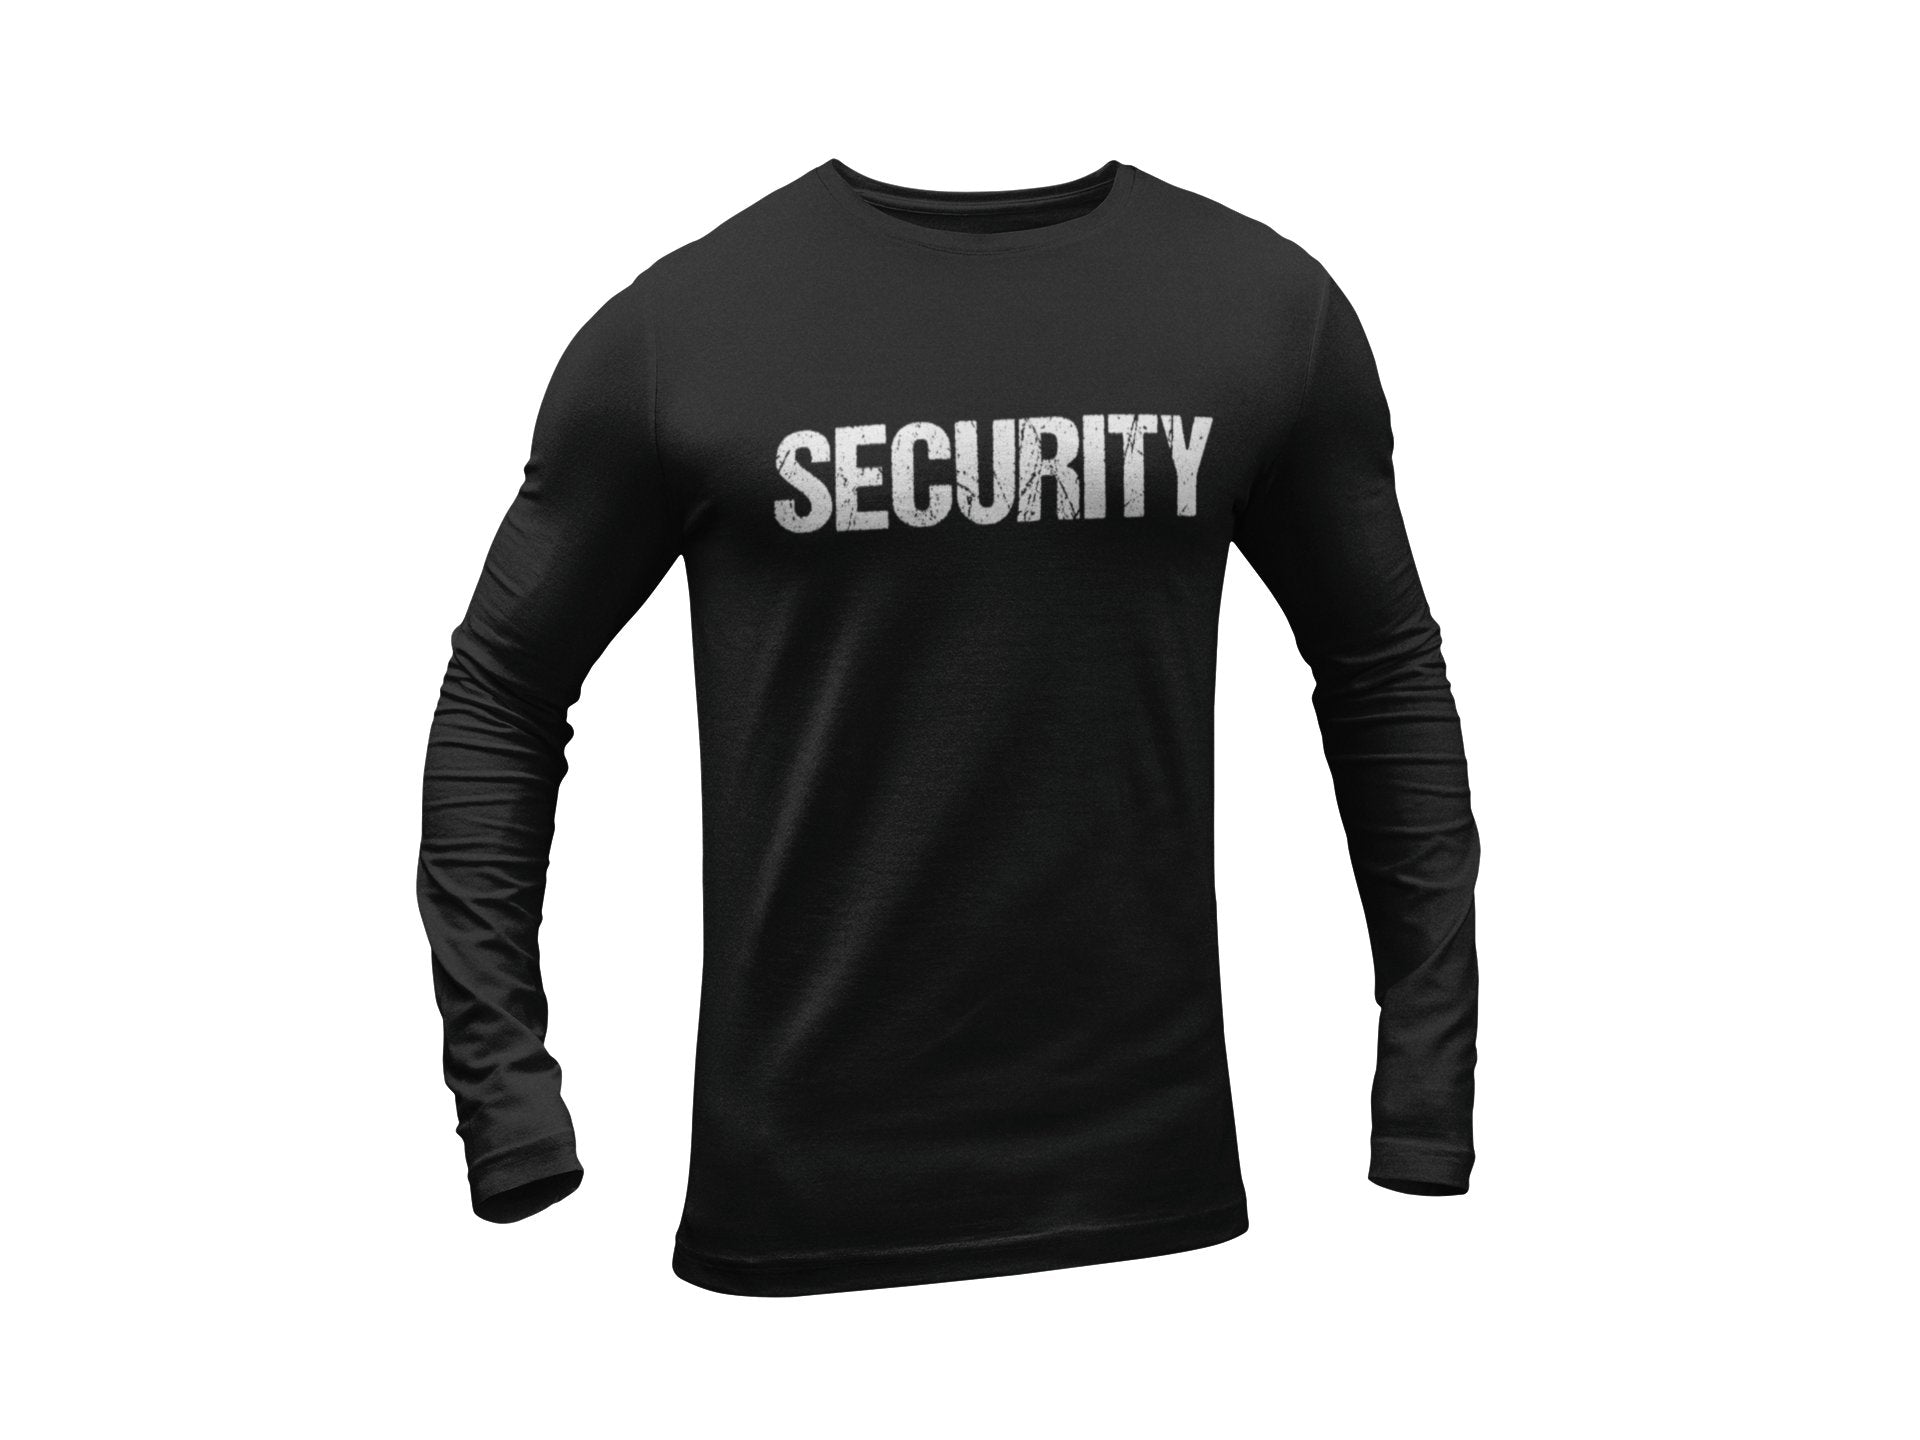 Men's Security Long Sleeve T-Shirt (Distressed Design, Black / White)